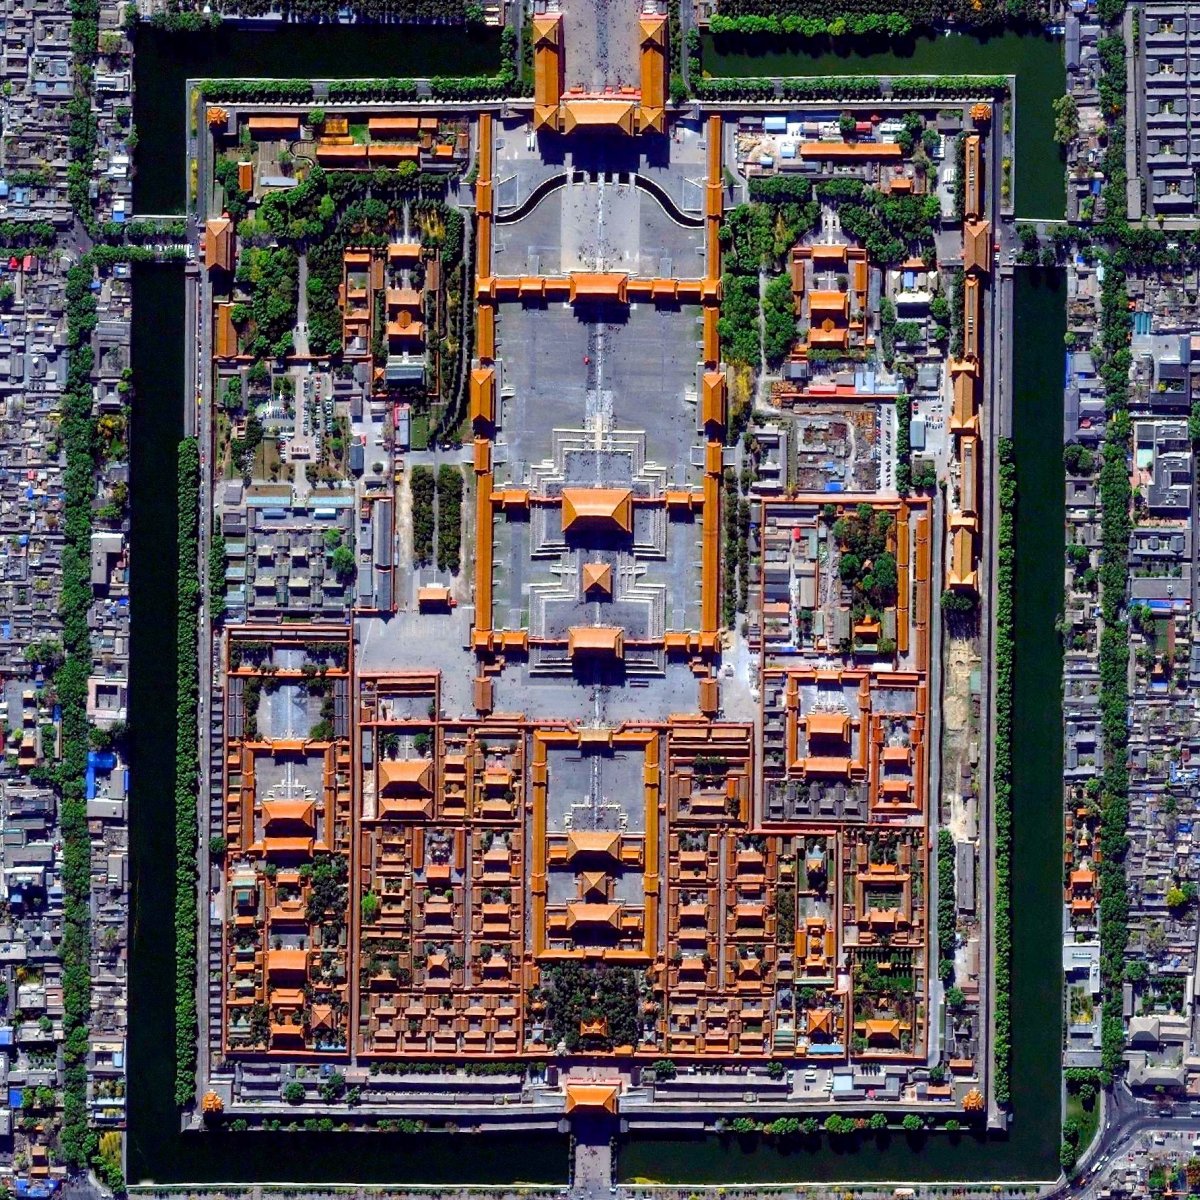 Forbidden City opening hours